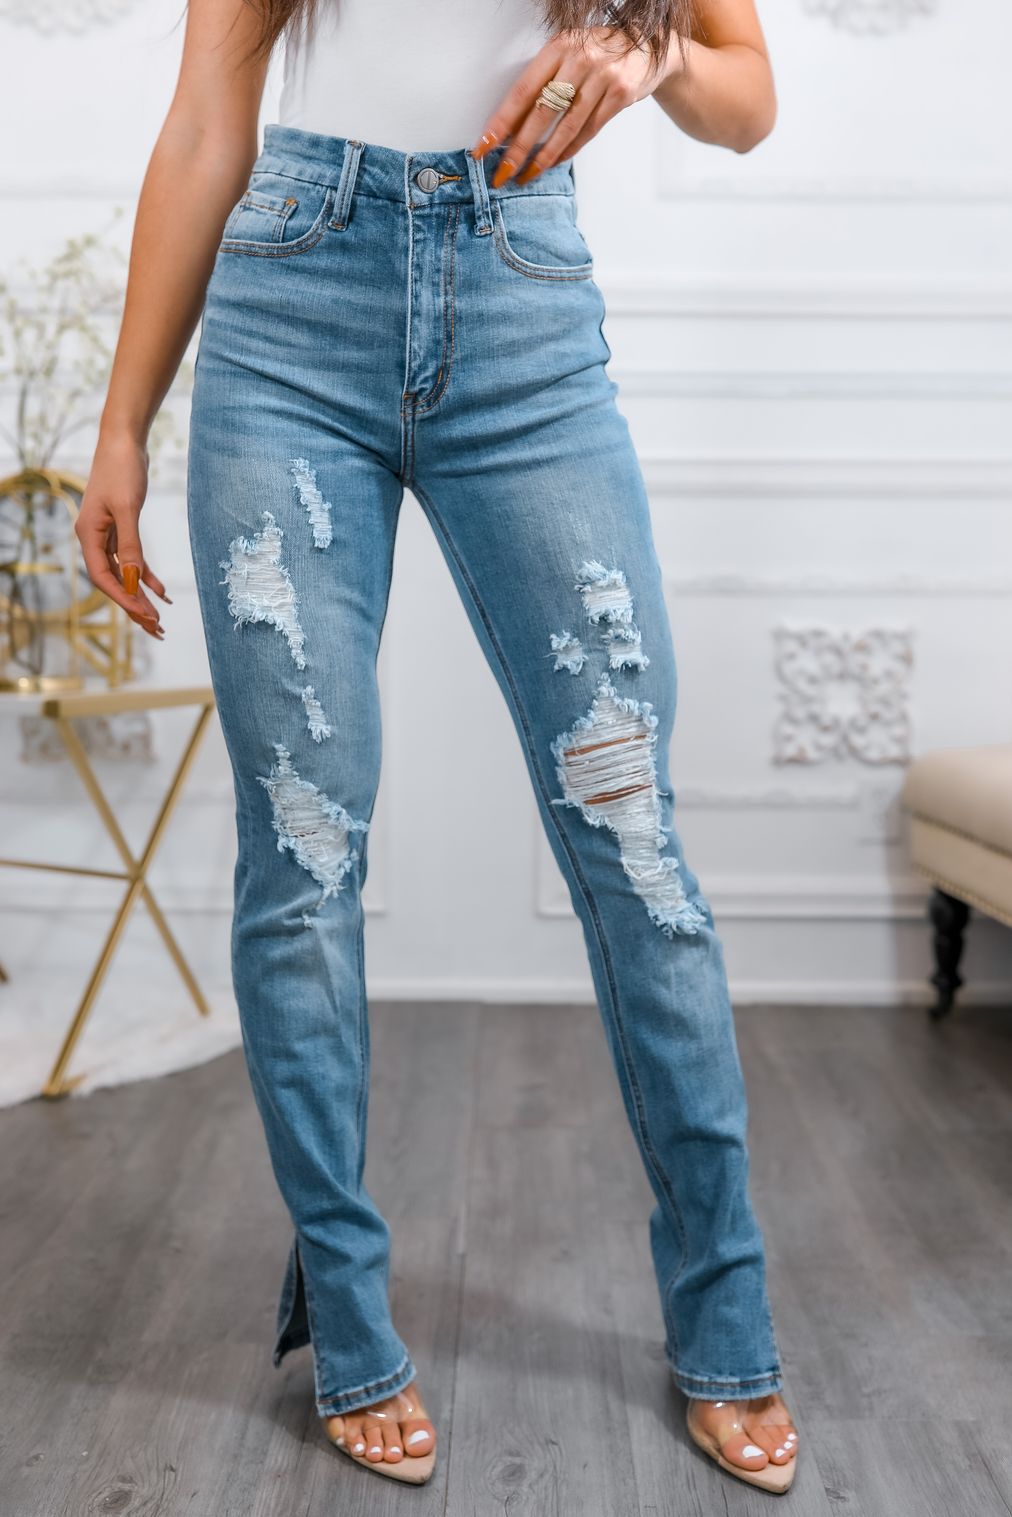 Split Up and Destroy Ripped Denim Jeans